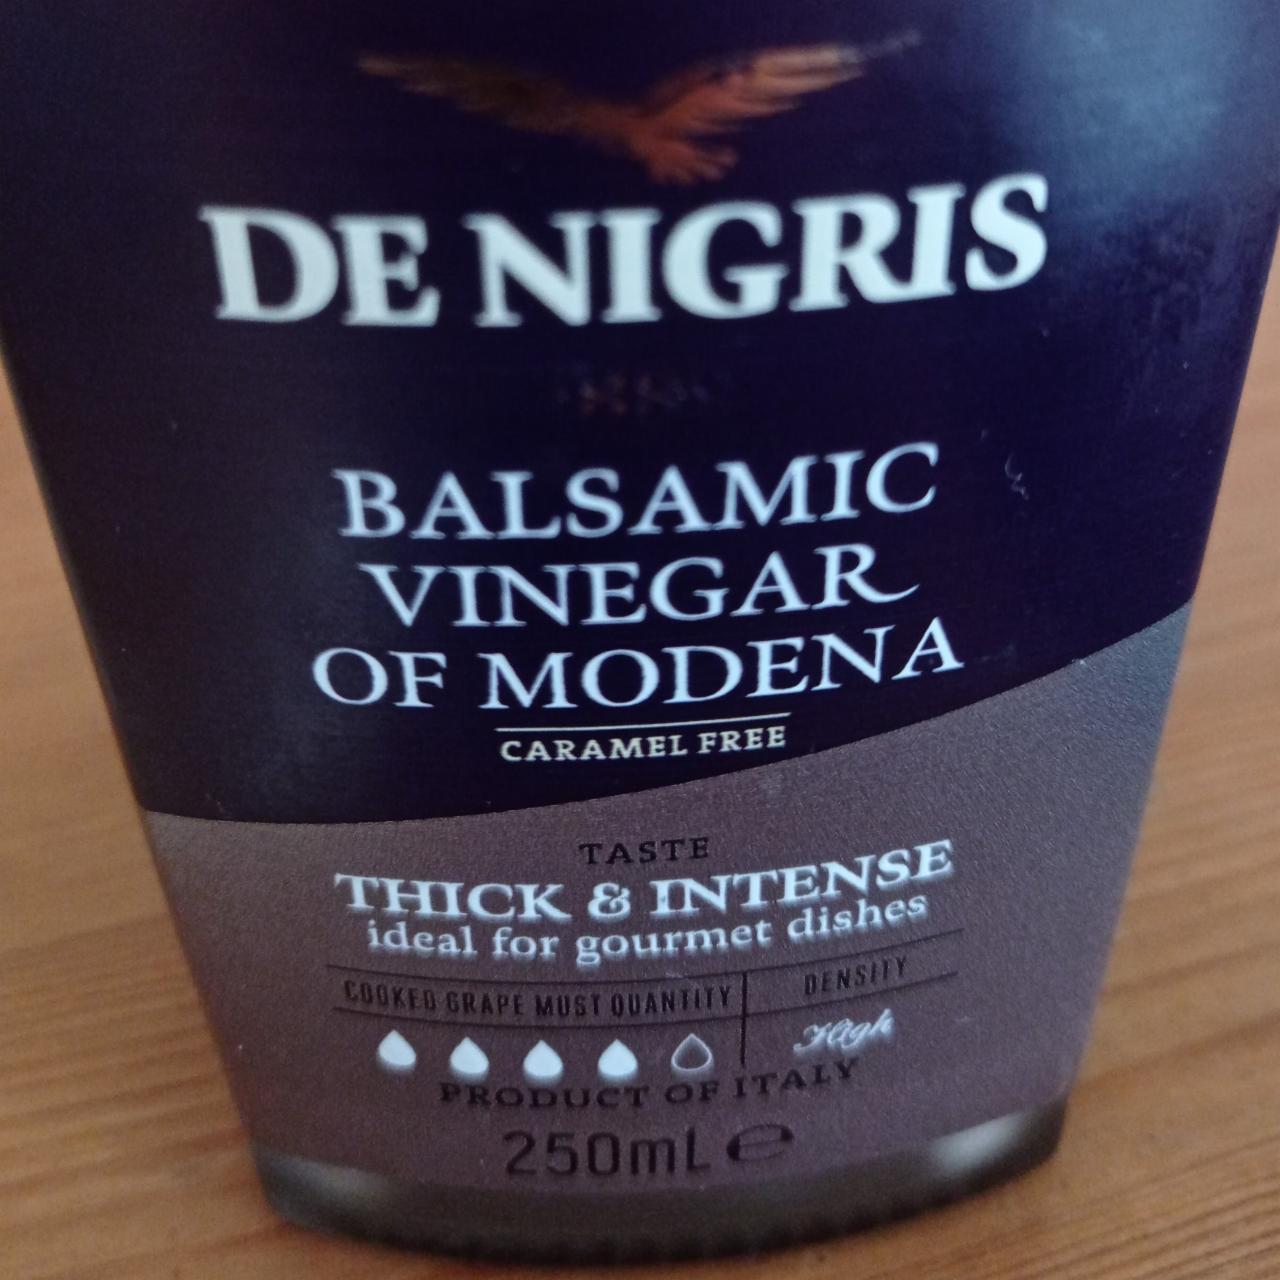 Képek - Balsamic vinegar of modena De Nigris